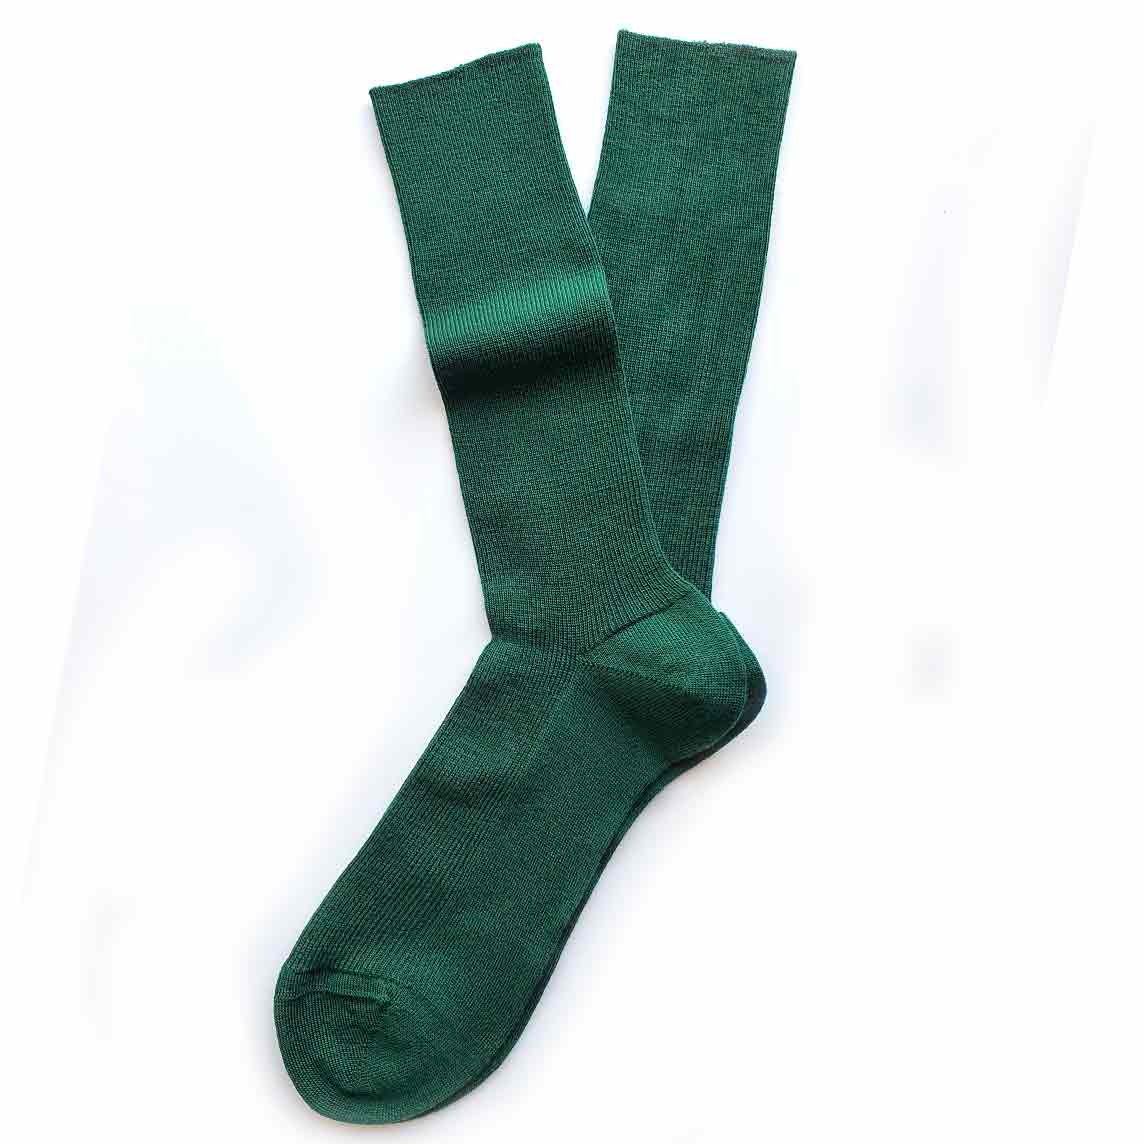 SOCKS men's socks • Thin wool socks that do not tighten • 85% wool • 13% cotton